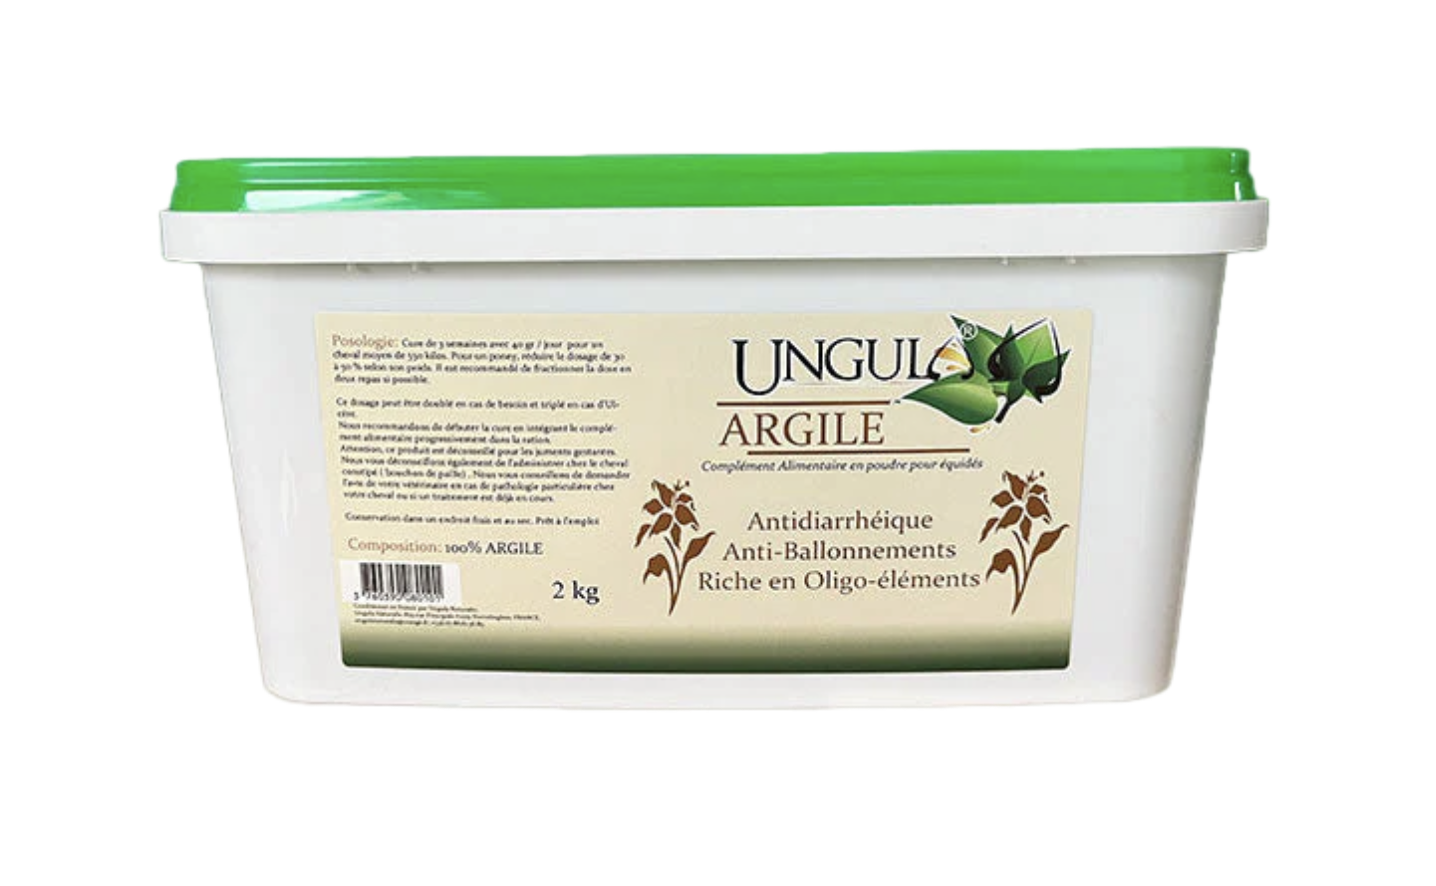 Argile-ungula-complément-digestif